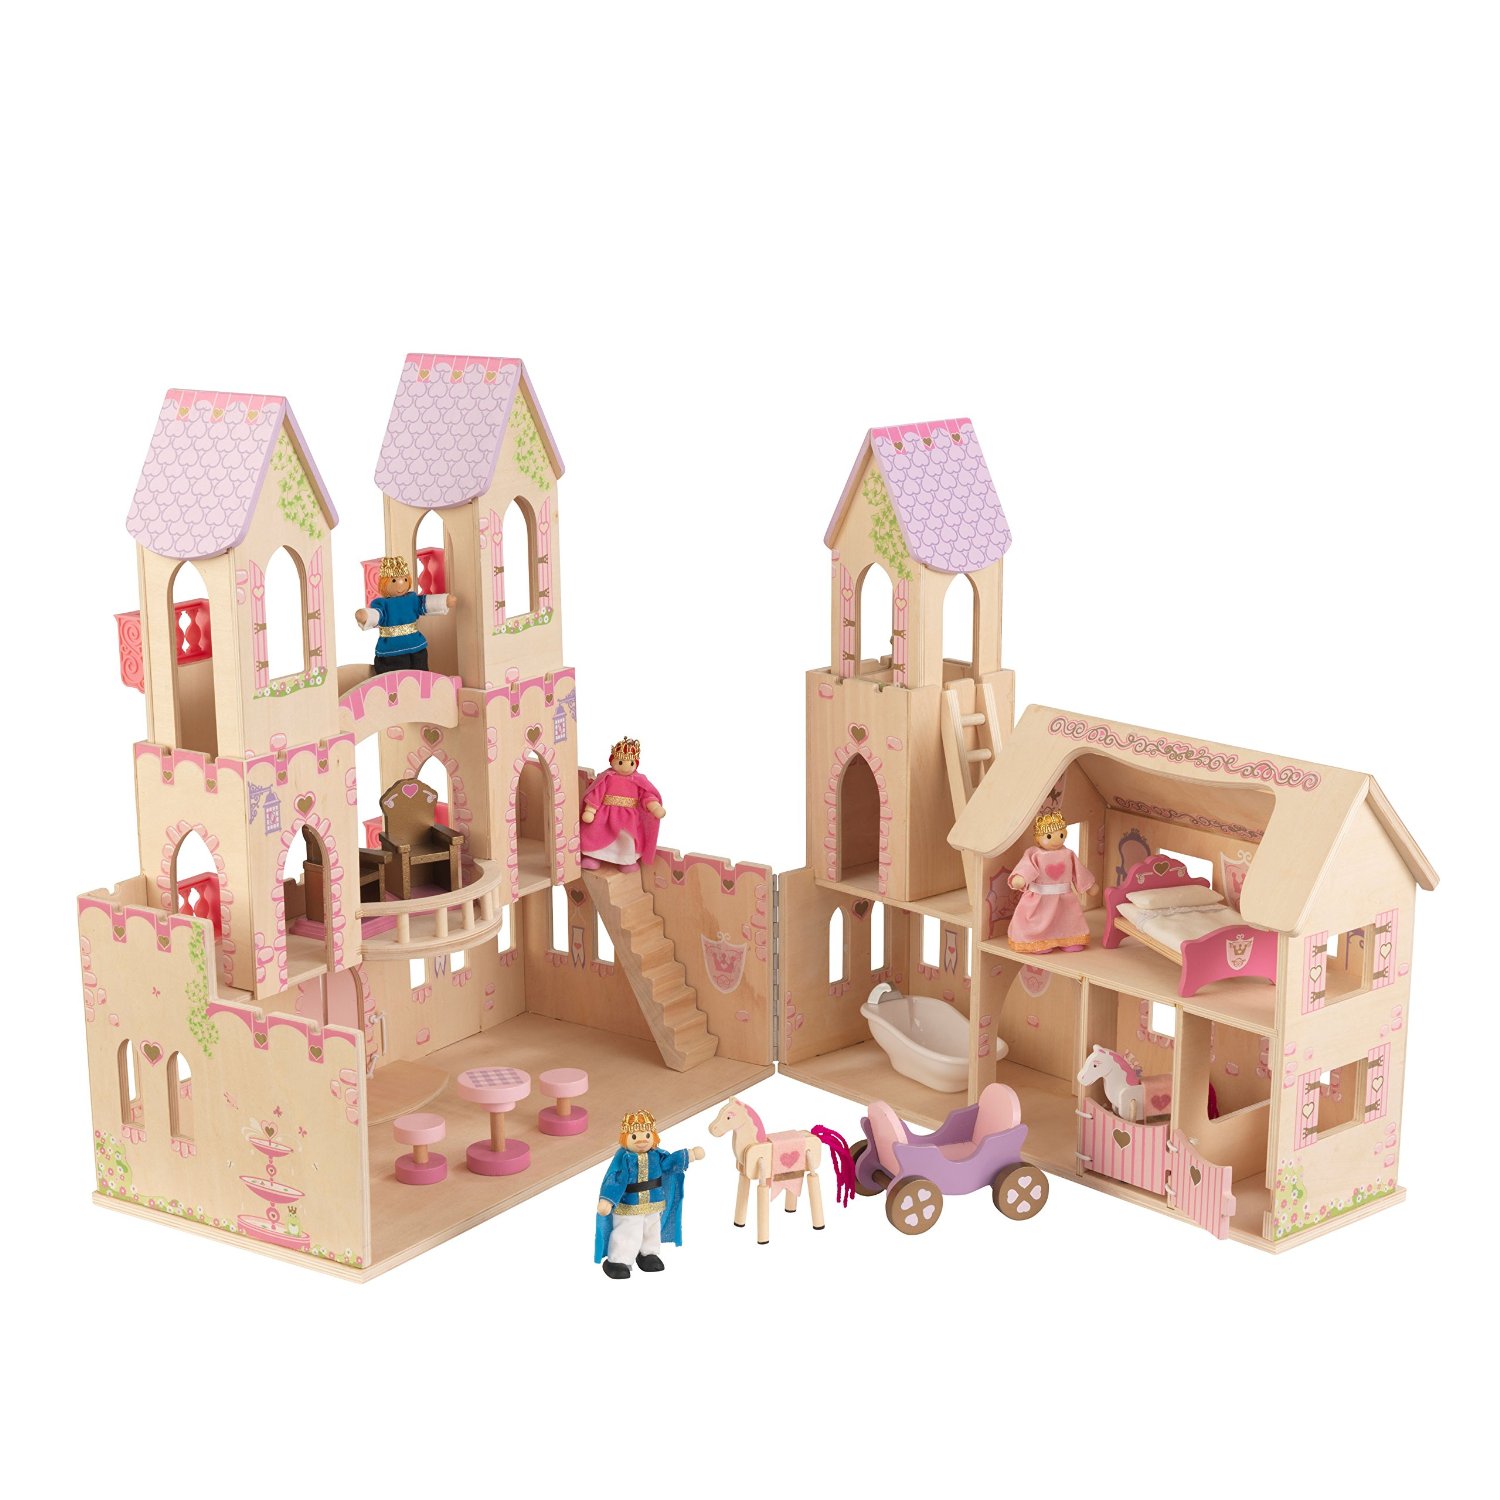 KidKraft Princess Castle Dollhouse with Furniture – Just $50.00!